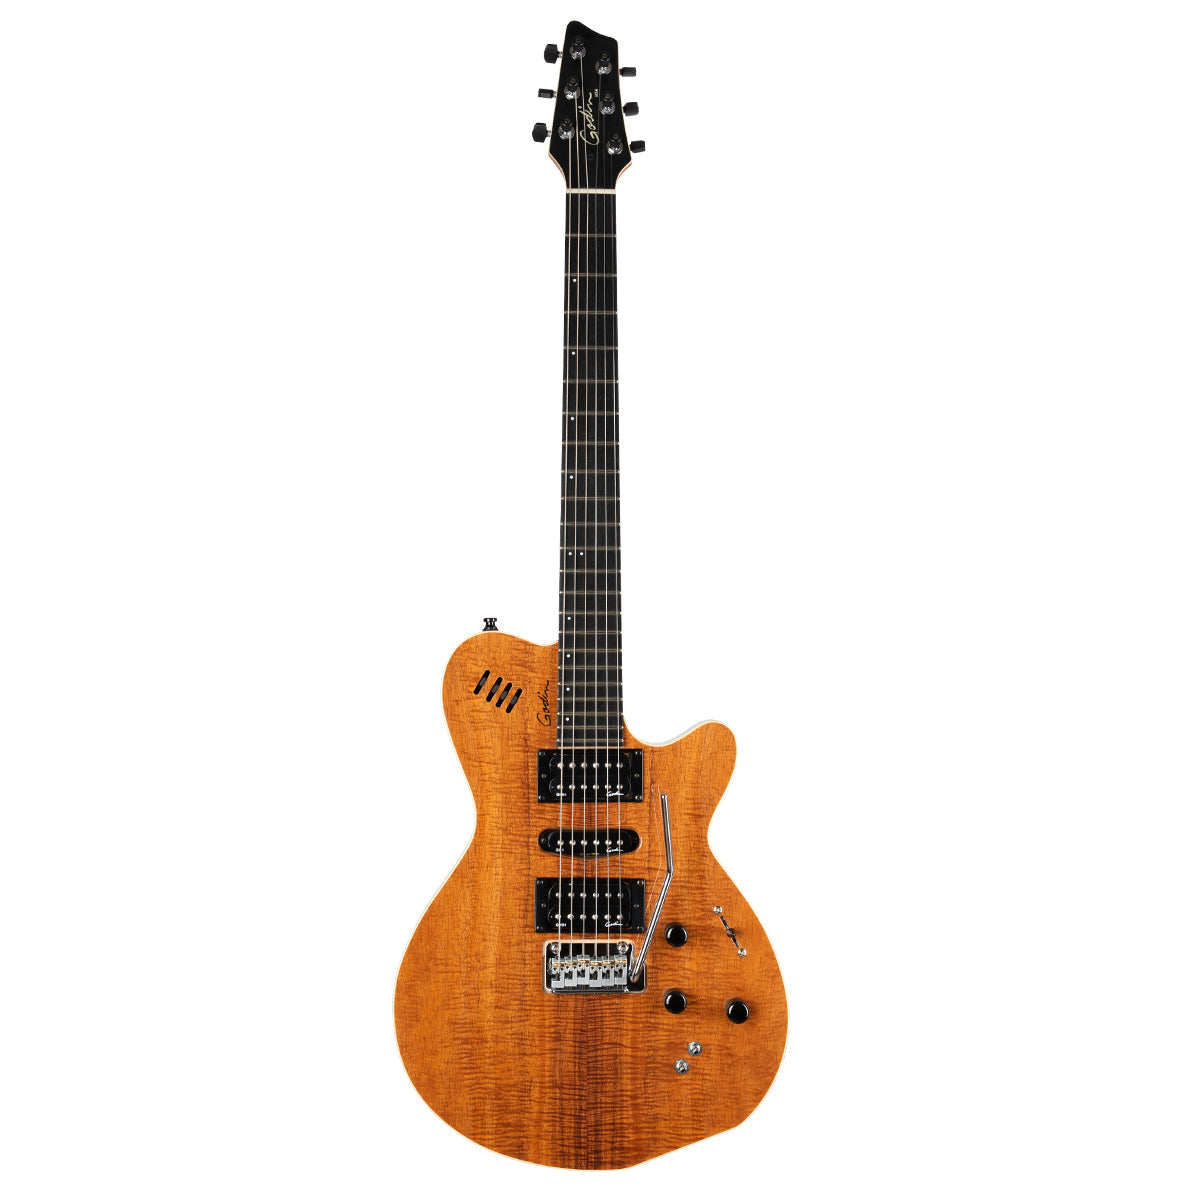 Godin XTSA 3 Voice Electric Guitar ~ Koa Extreme HG, Electric Guitar for sale at Richards Guitars.